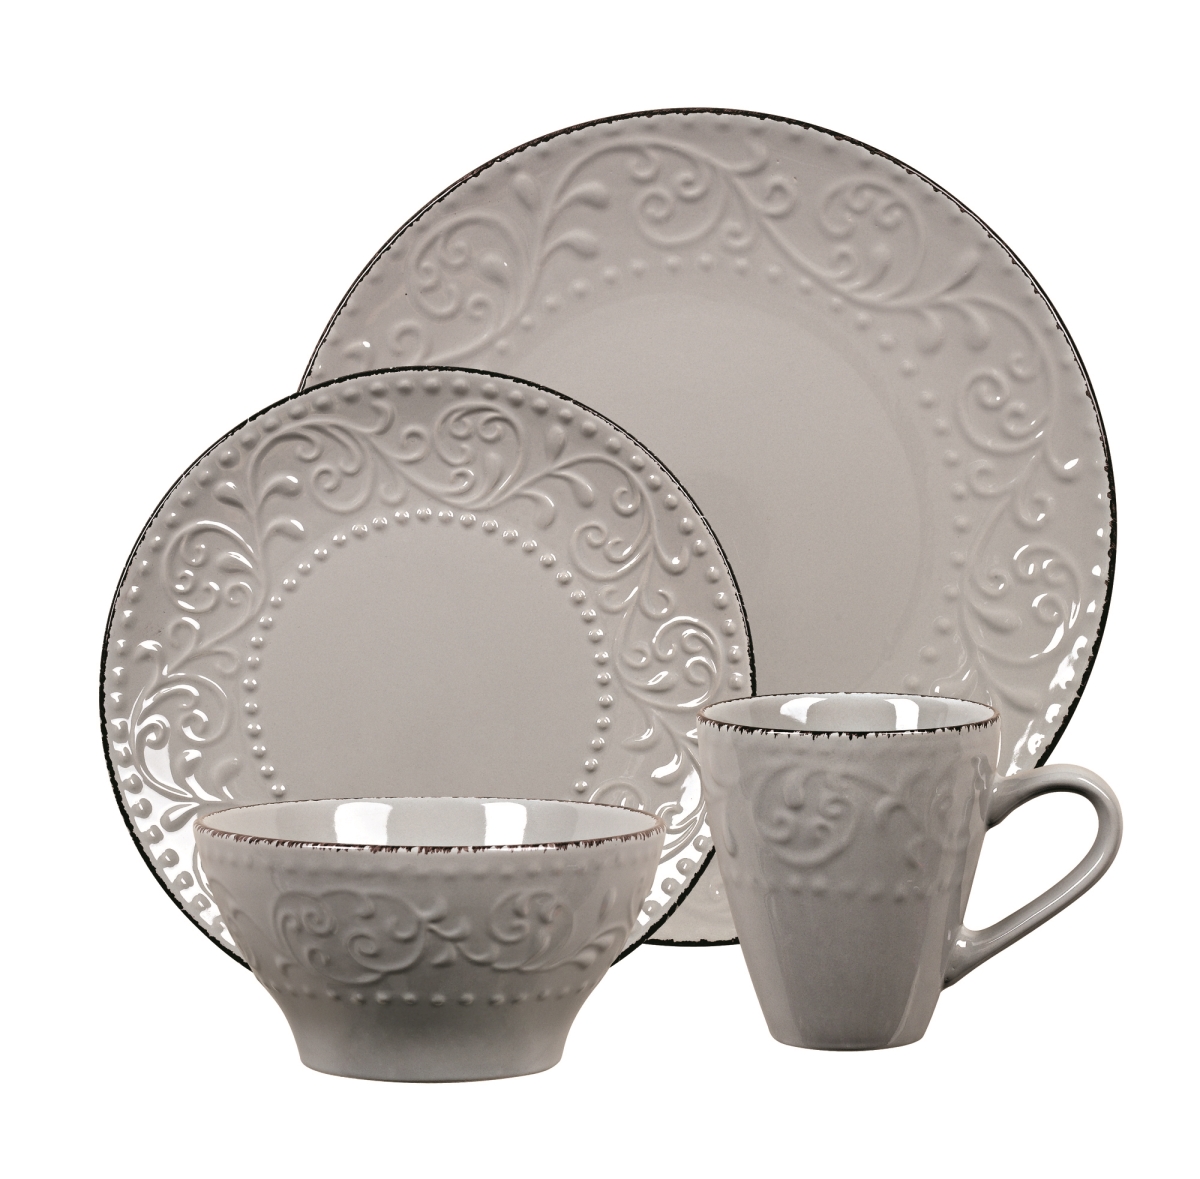 Picture of Lorren Home Trends LH527 16 Piece Stoneware Scroll Dinnerware Set, Gray